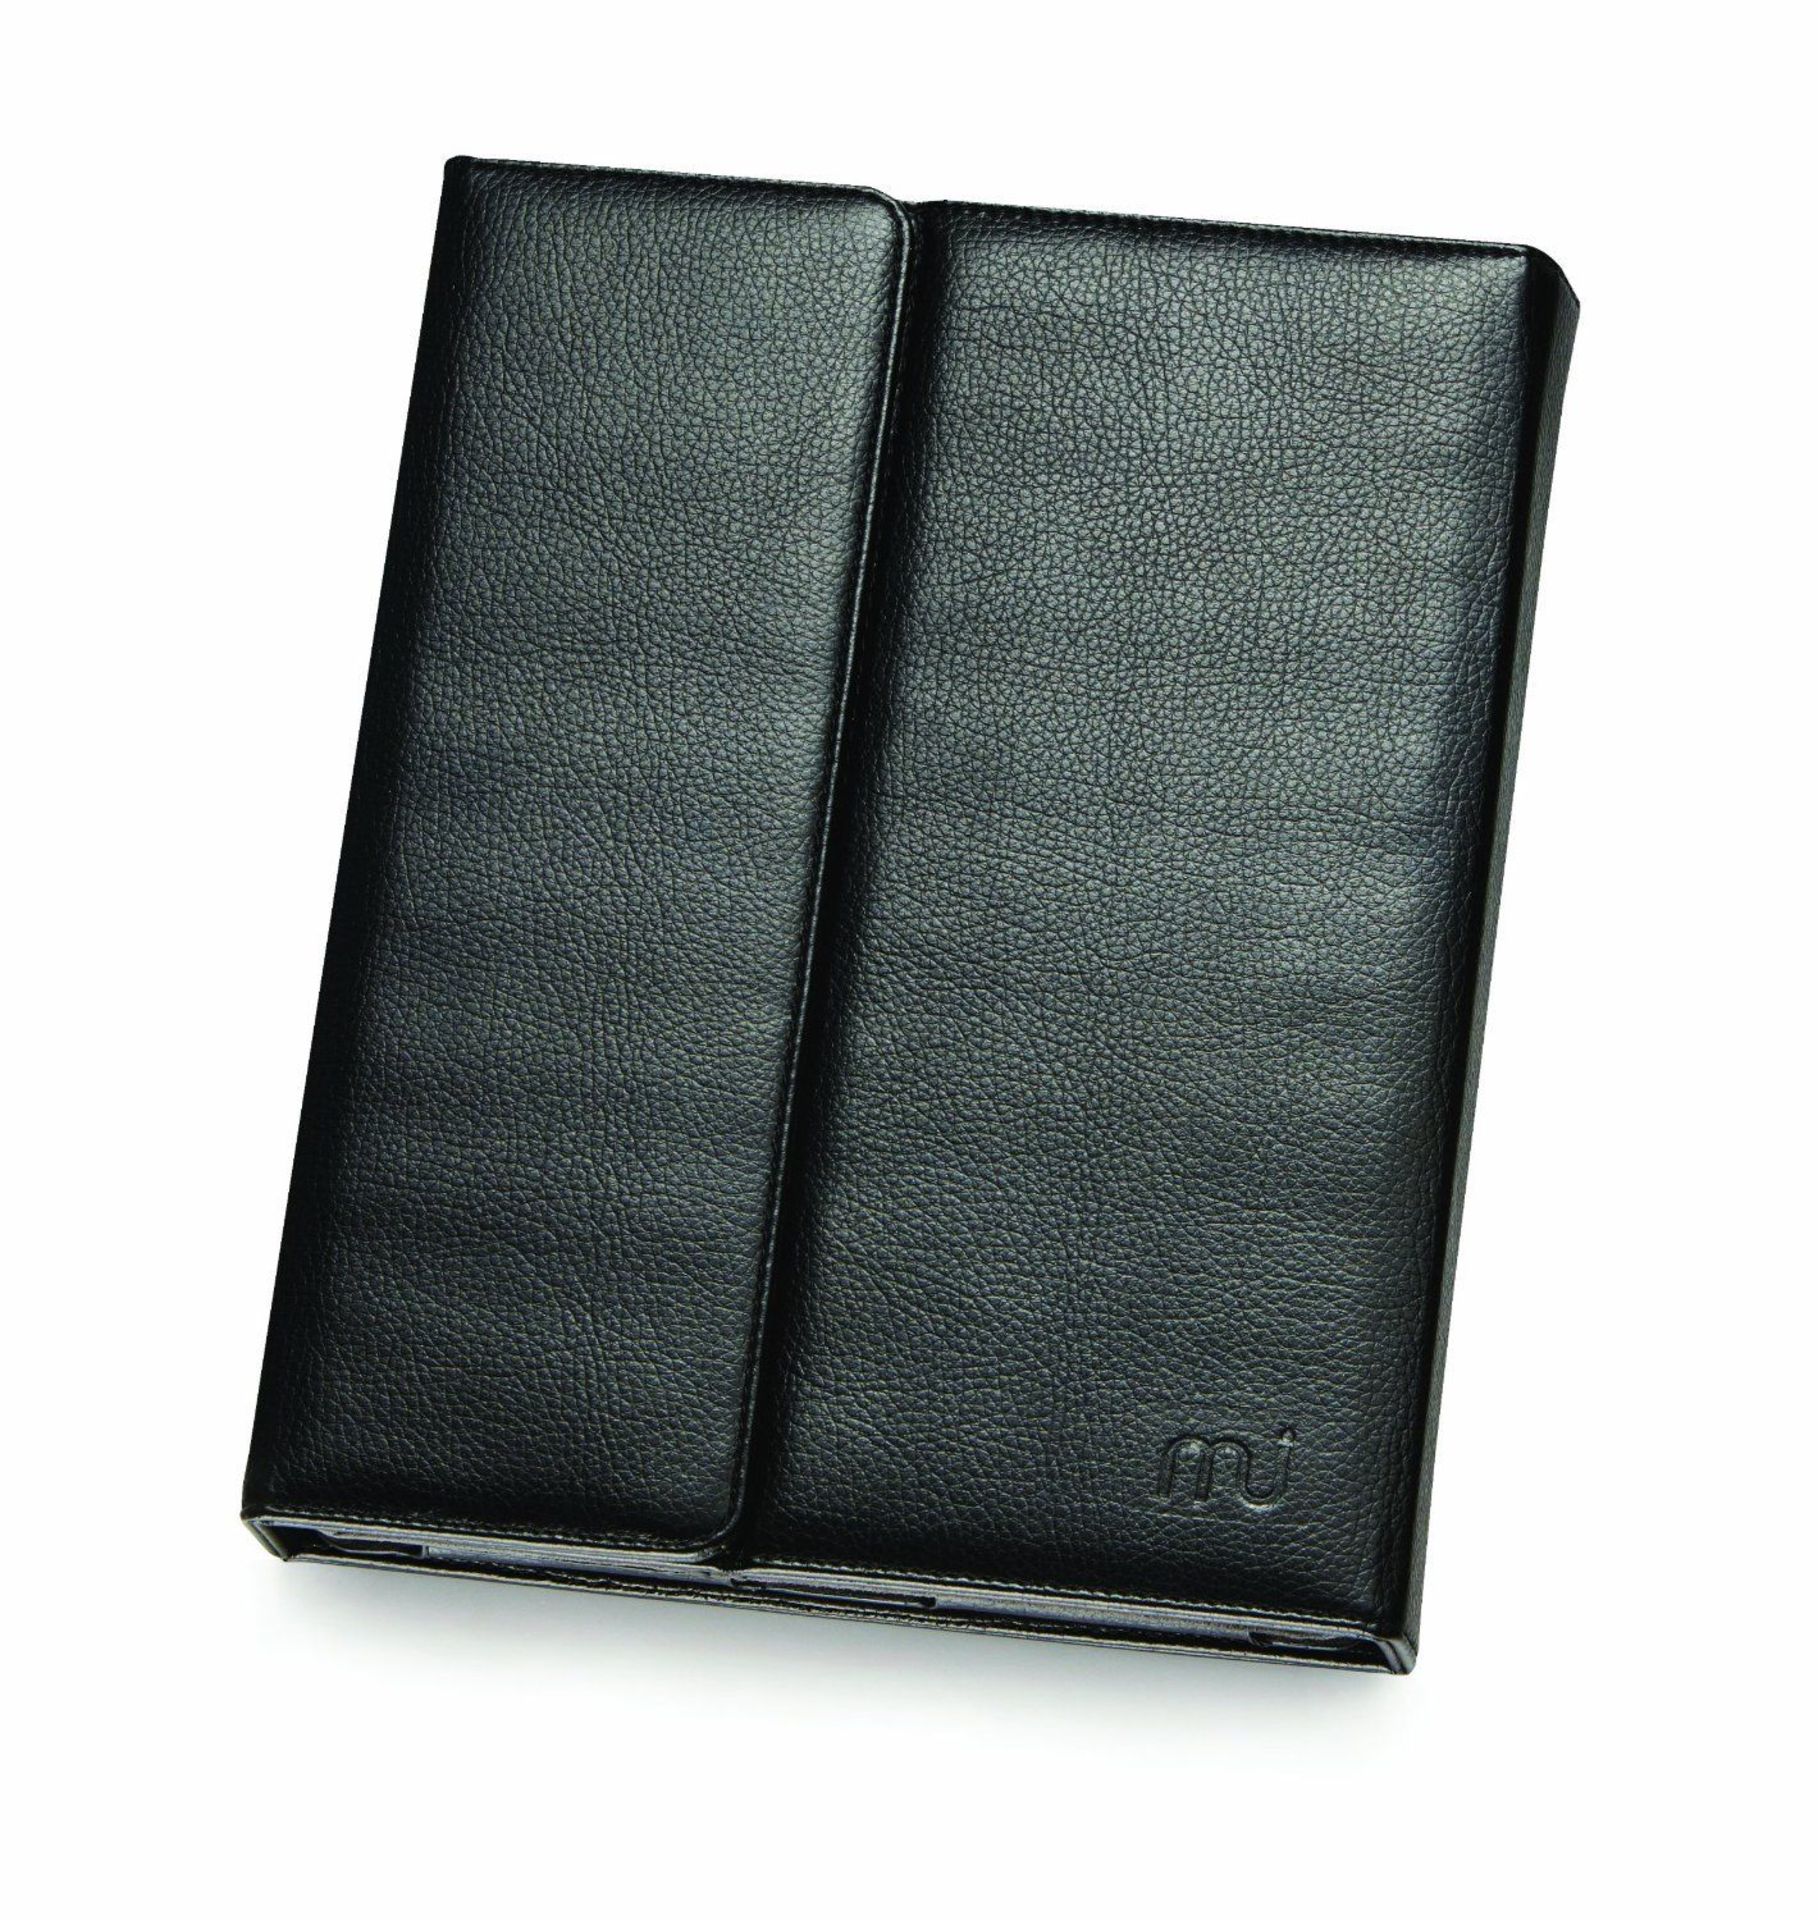 1 x Mi Genuine Leather IPAD CASE With Integrated Bluetooth 2.0 Keyboard - Wireless Keyboard, Upto 90 - Image 3 of 4